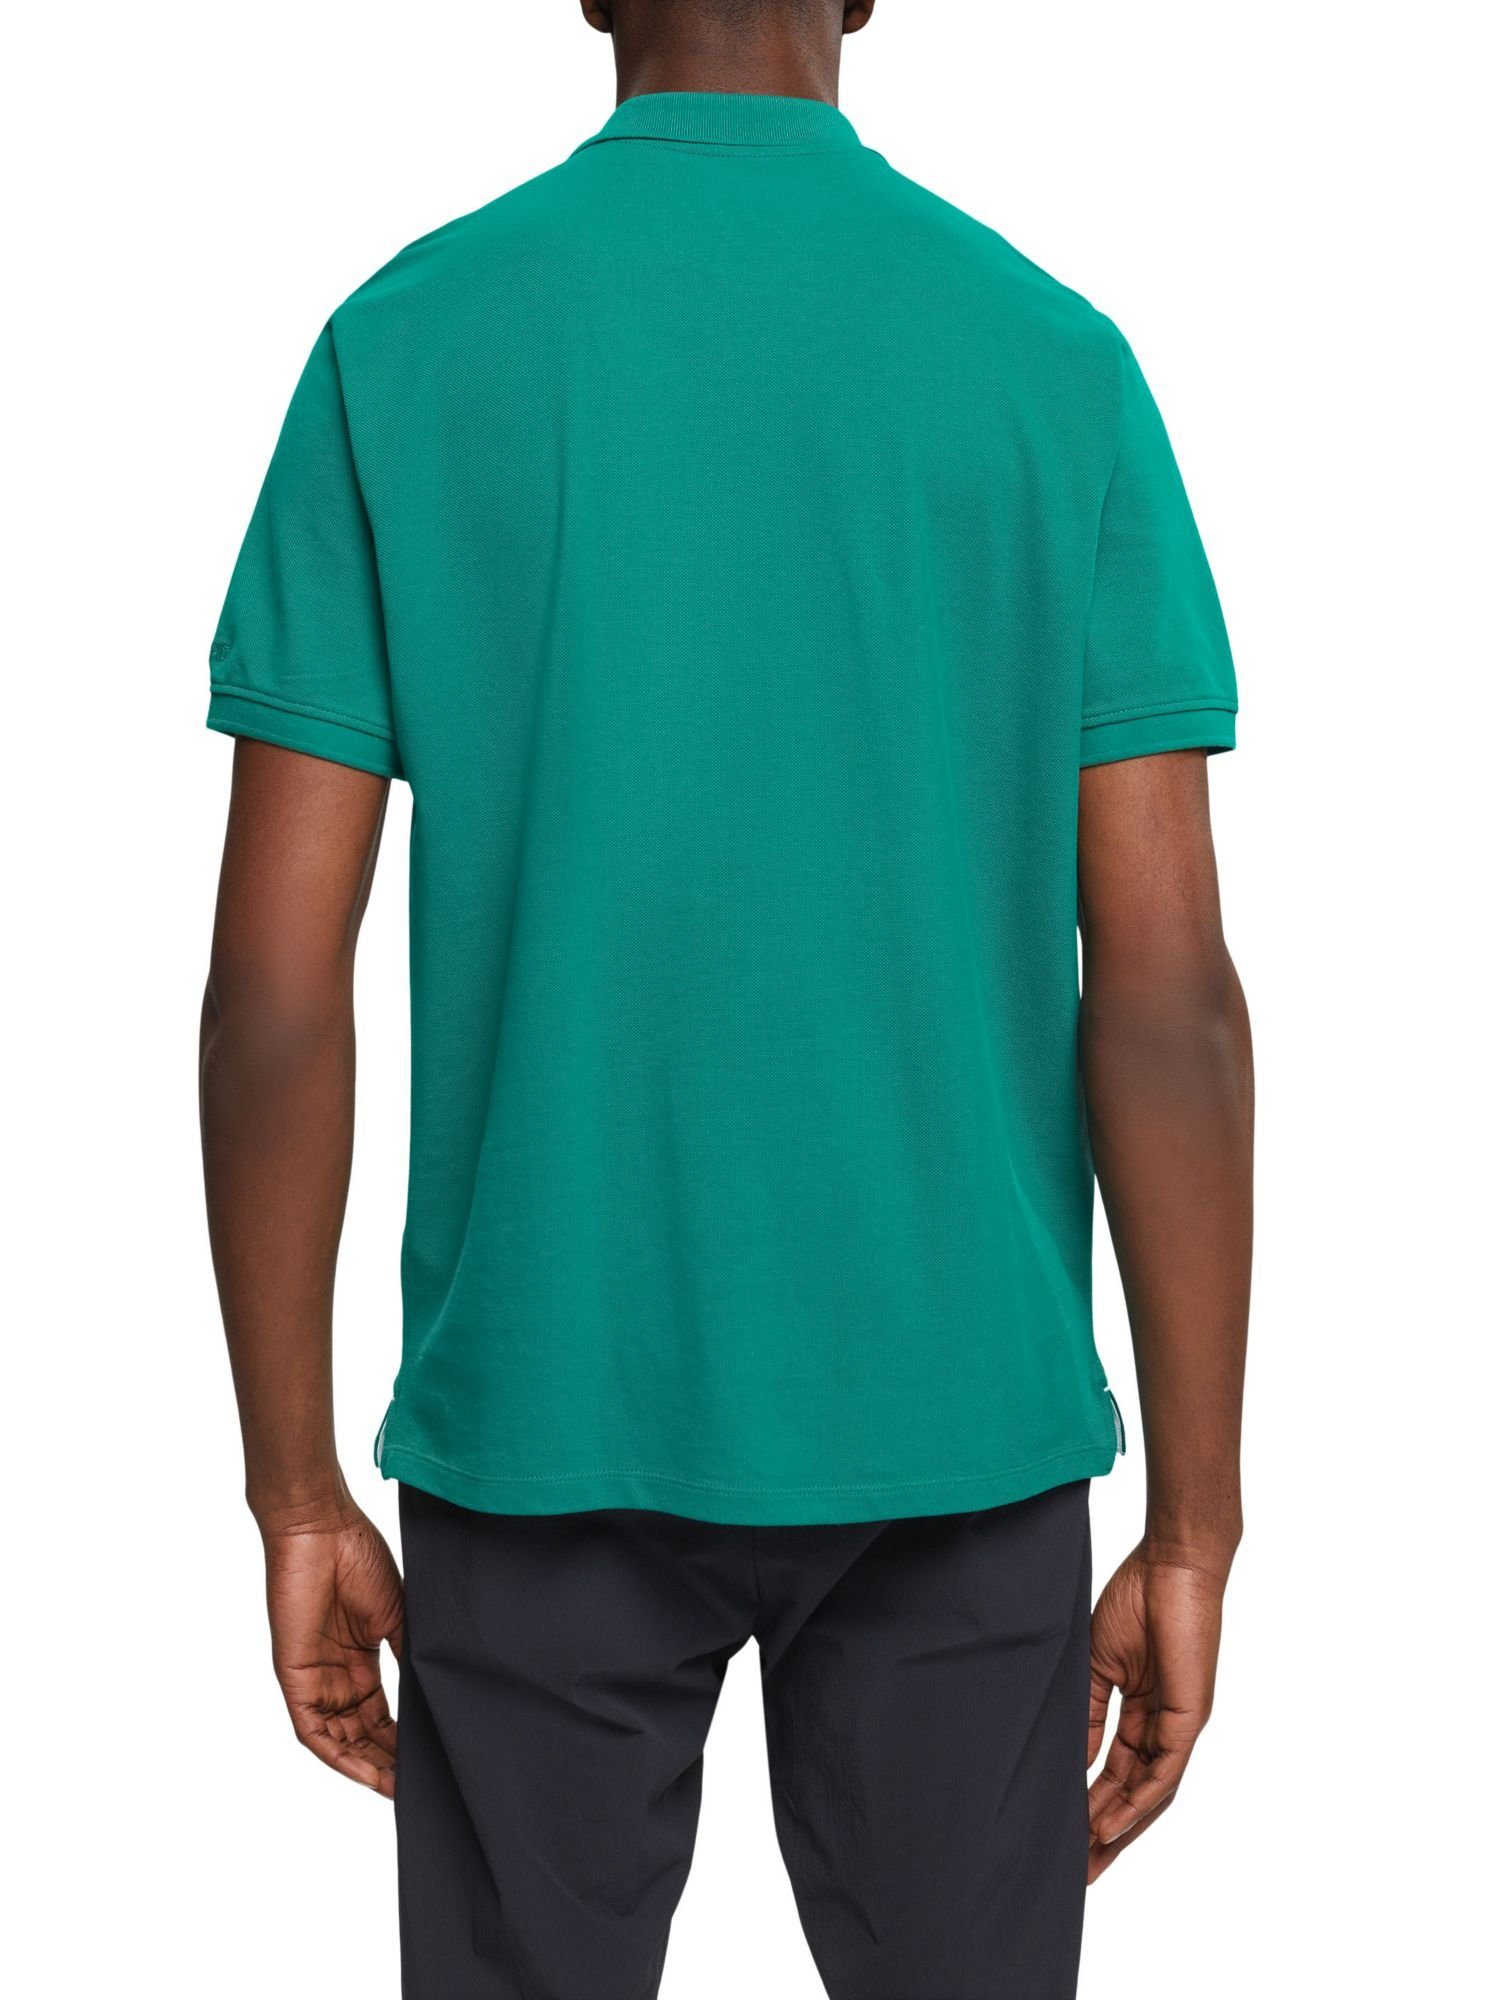 Esprit Poloshirt Slim Fit EMERALD Poloshirt GREEN